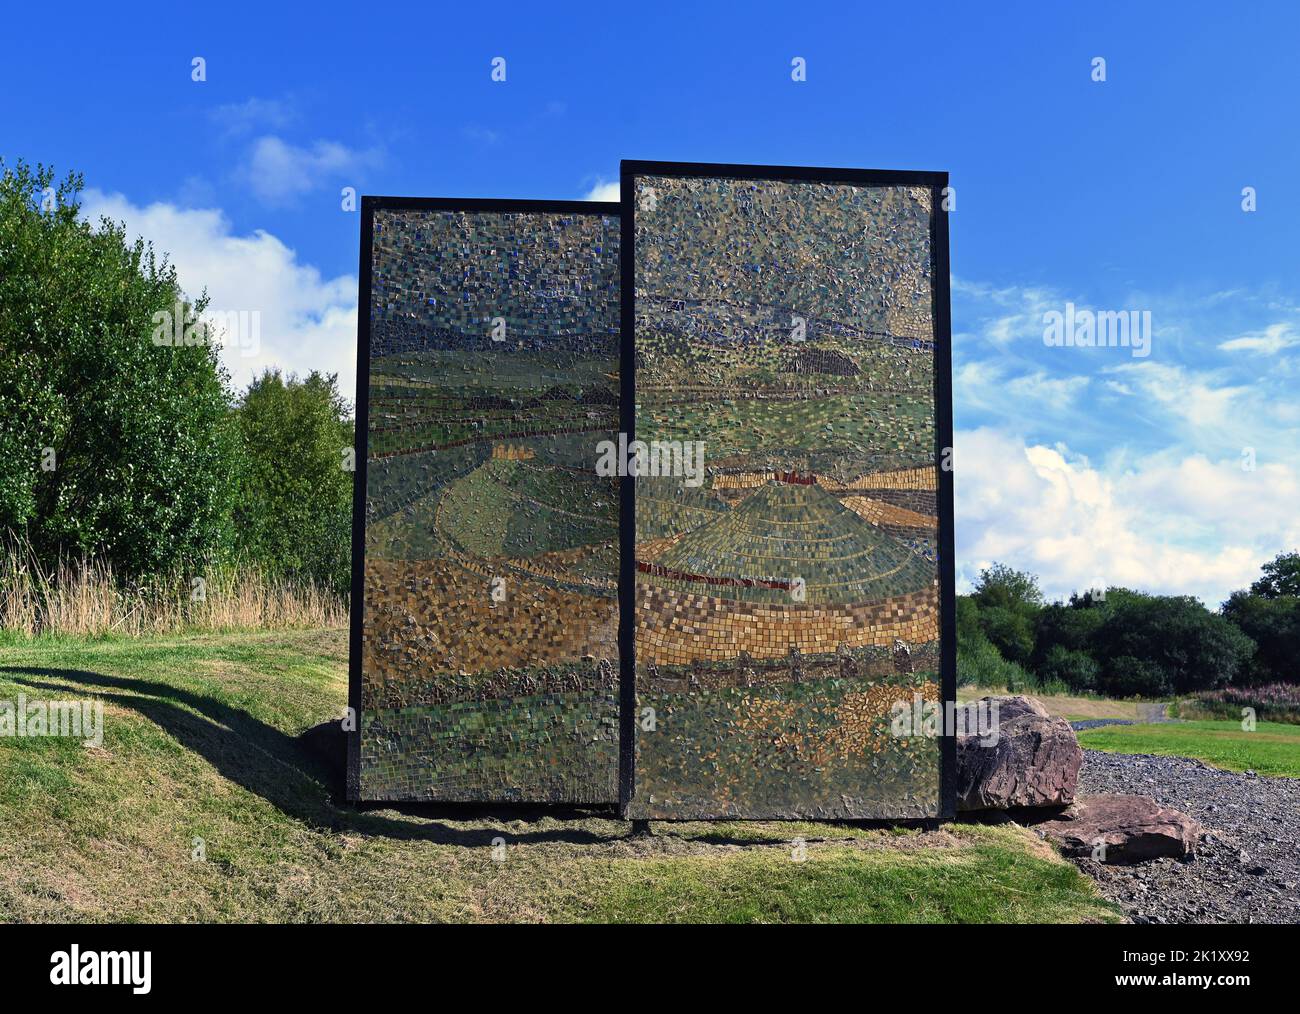 Mosaico paisaje, obras de arte al aire libre de Charles Jencks. Crawick Multiverso, Sanquhar, Dumfries y Galloway, Escocia, Reino Unido, Europa. Foto de stock